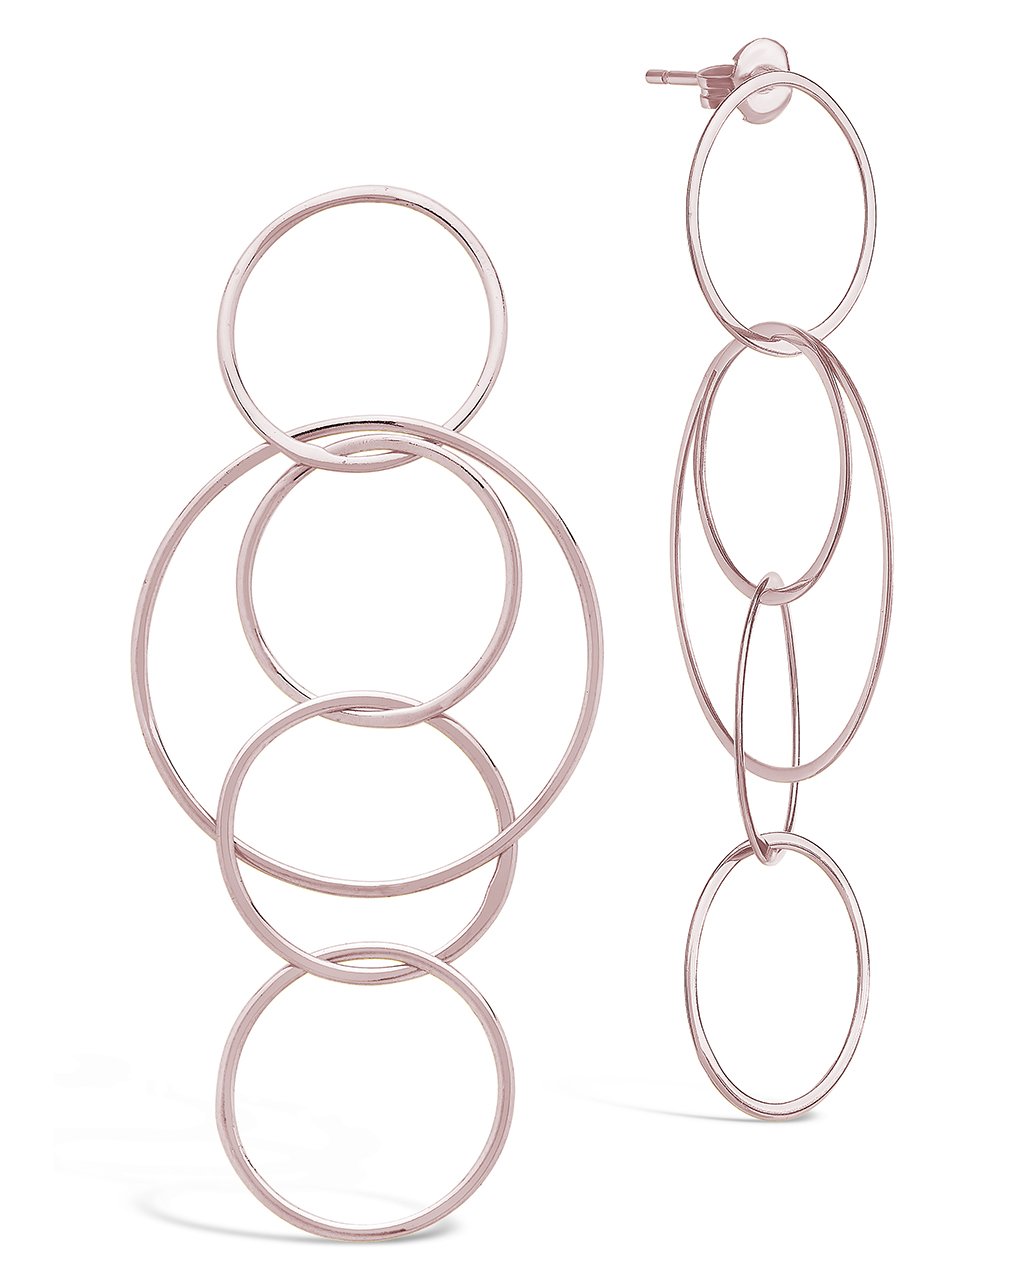 Full Circle Hoop Earrings, Gold Fill, Rose Gold Fill, or Sterling Silver Sterling Silver / 2”